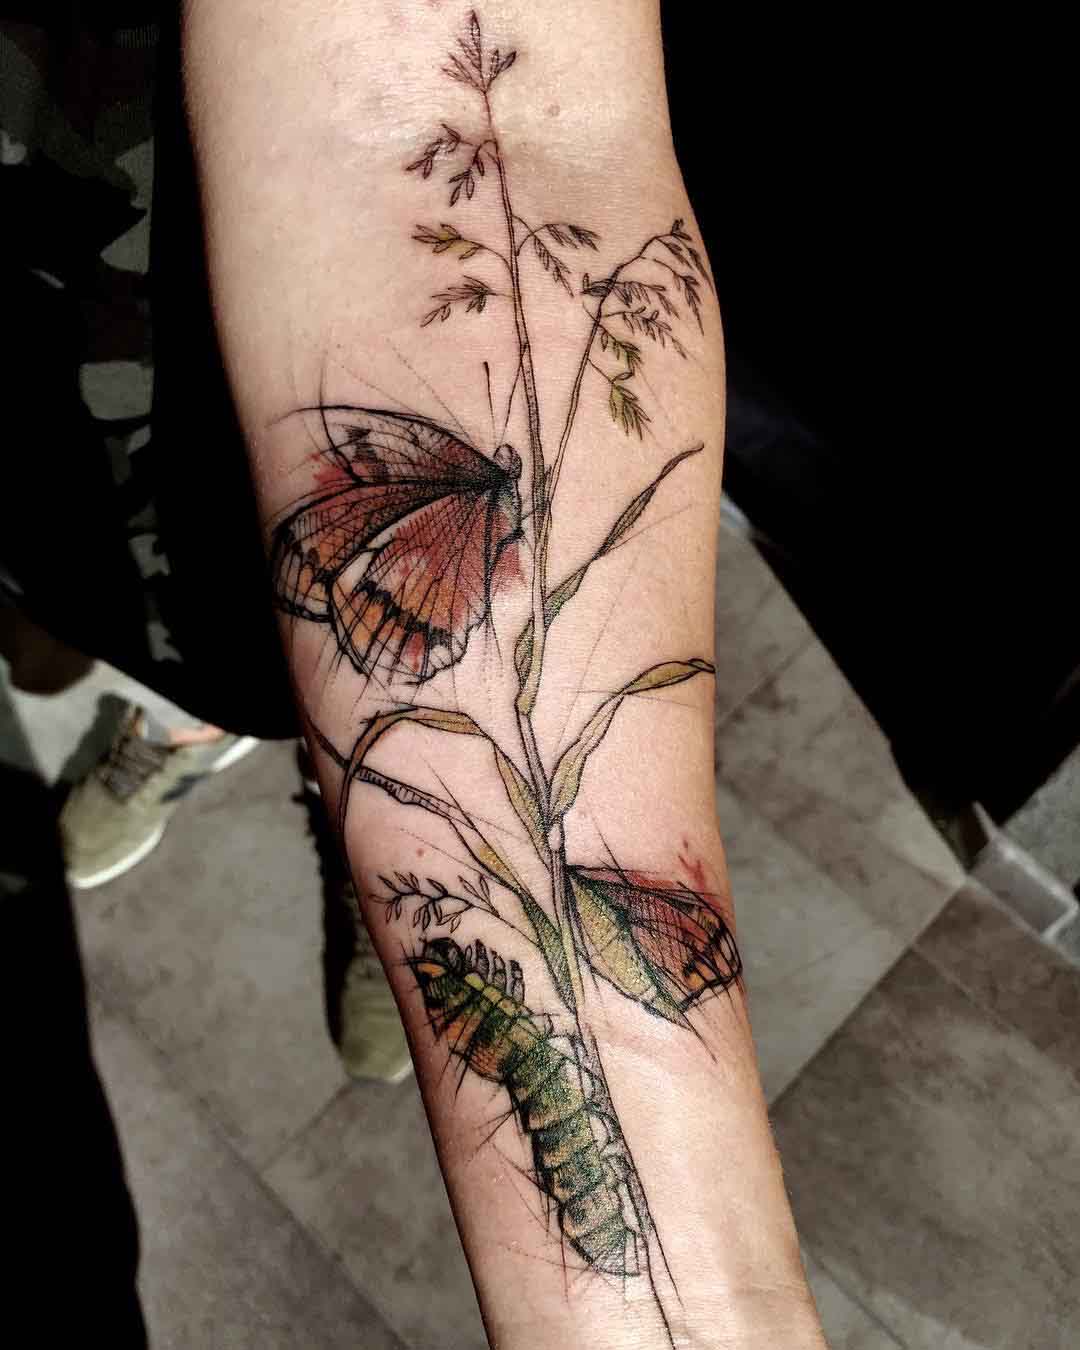 butterfly and catterpillar tattoo